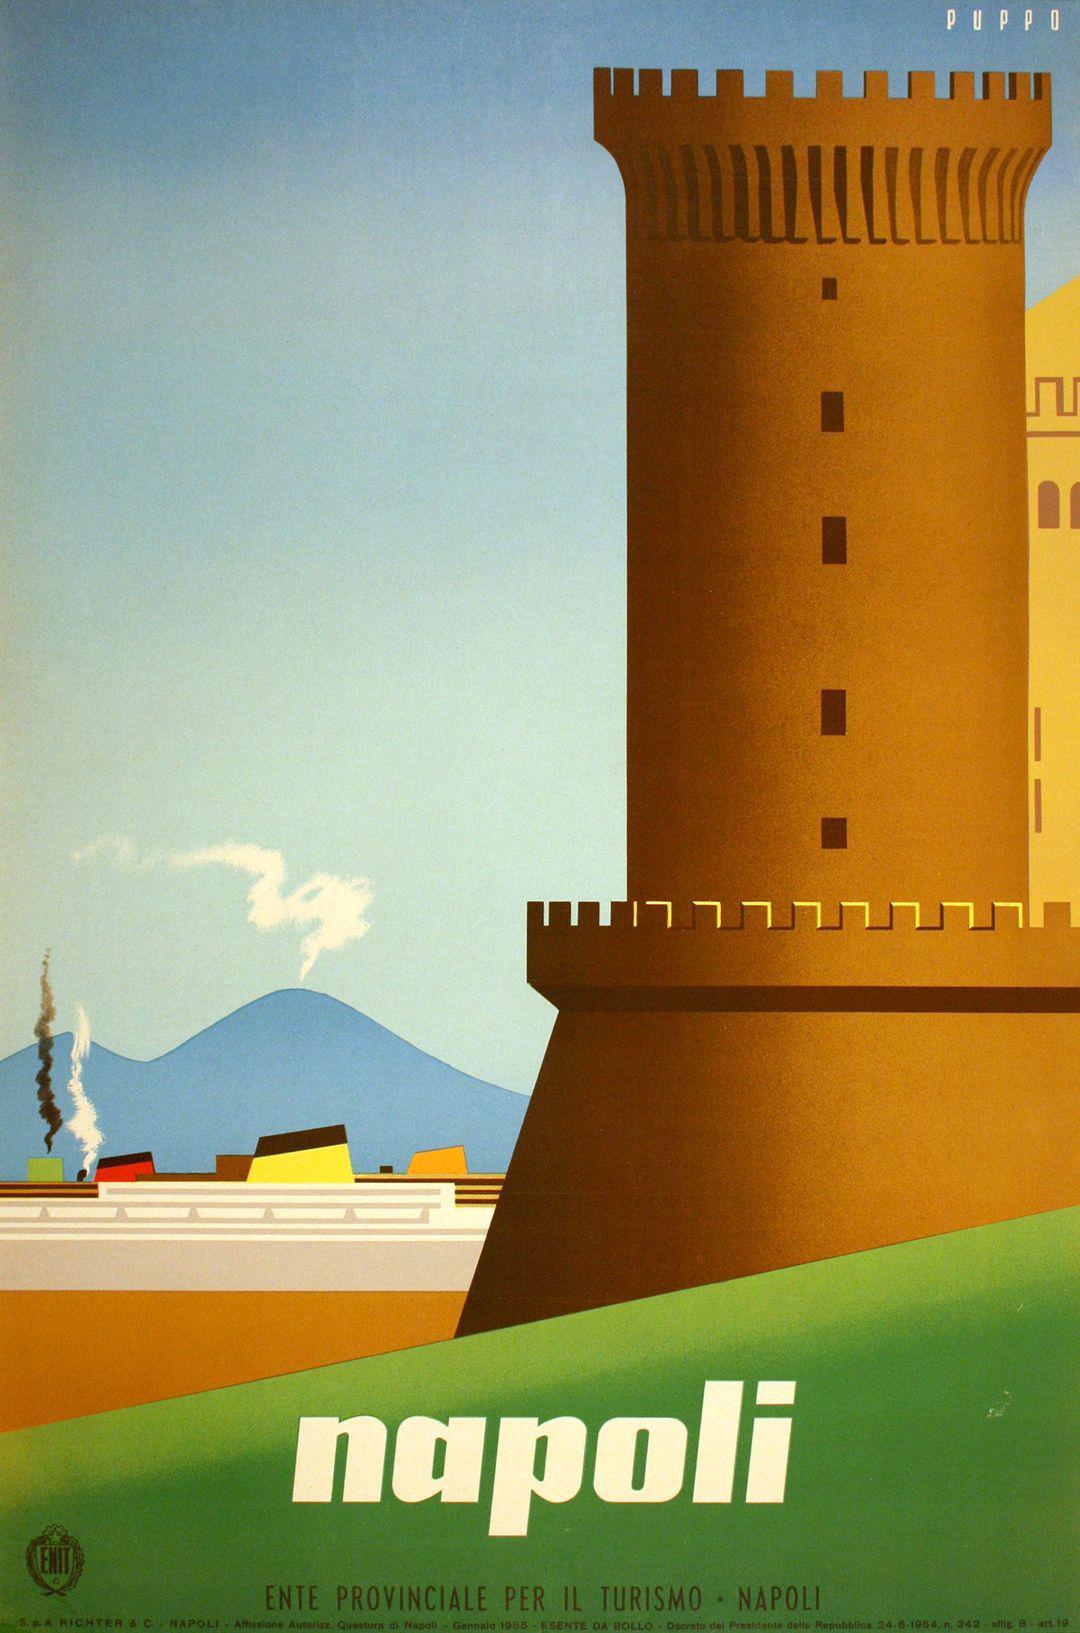 Original Vintage Italian Travel Poster Napoli Naples 1954 by Mario Puppo